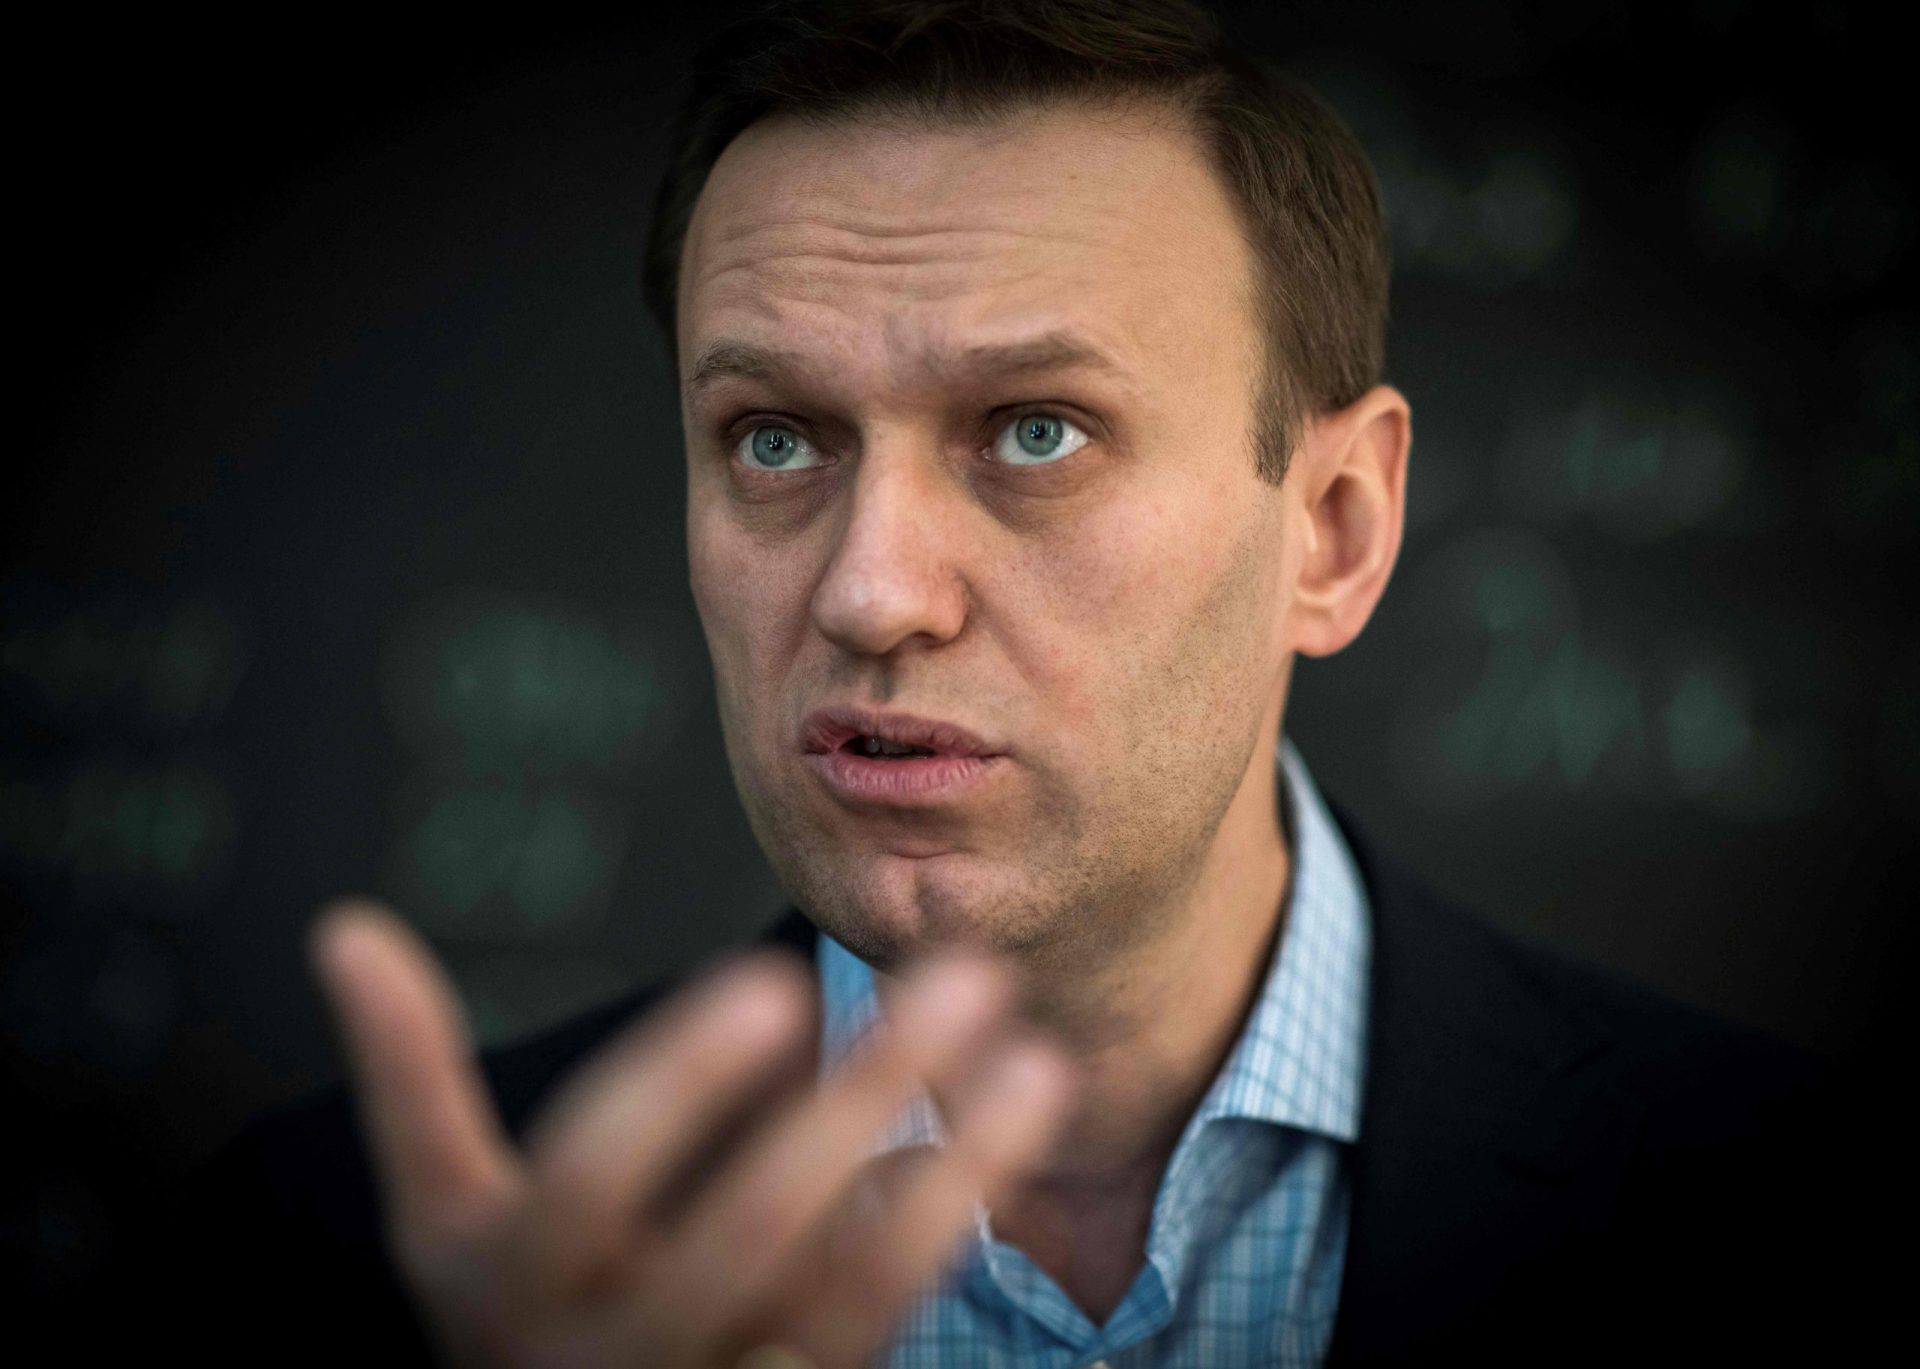 G7 pede à Rússia “transparência total” no caso Navalny e exorta país a levar responsáveis à justiça